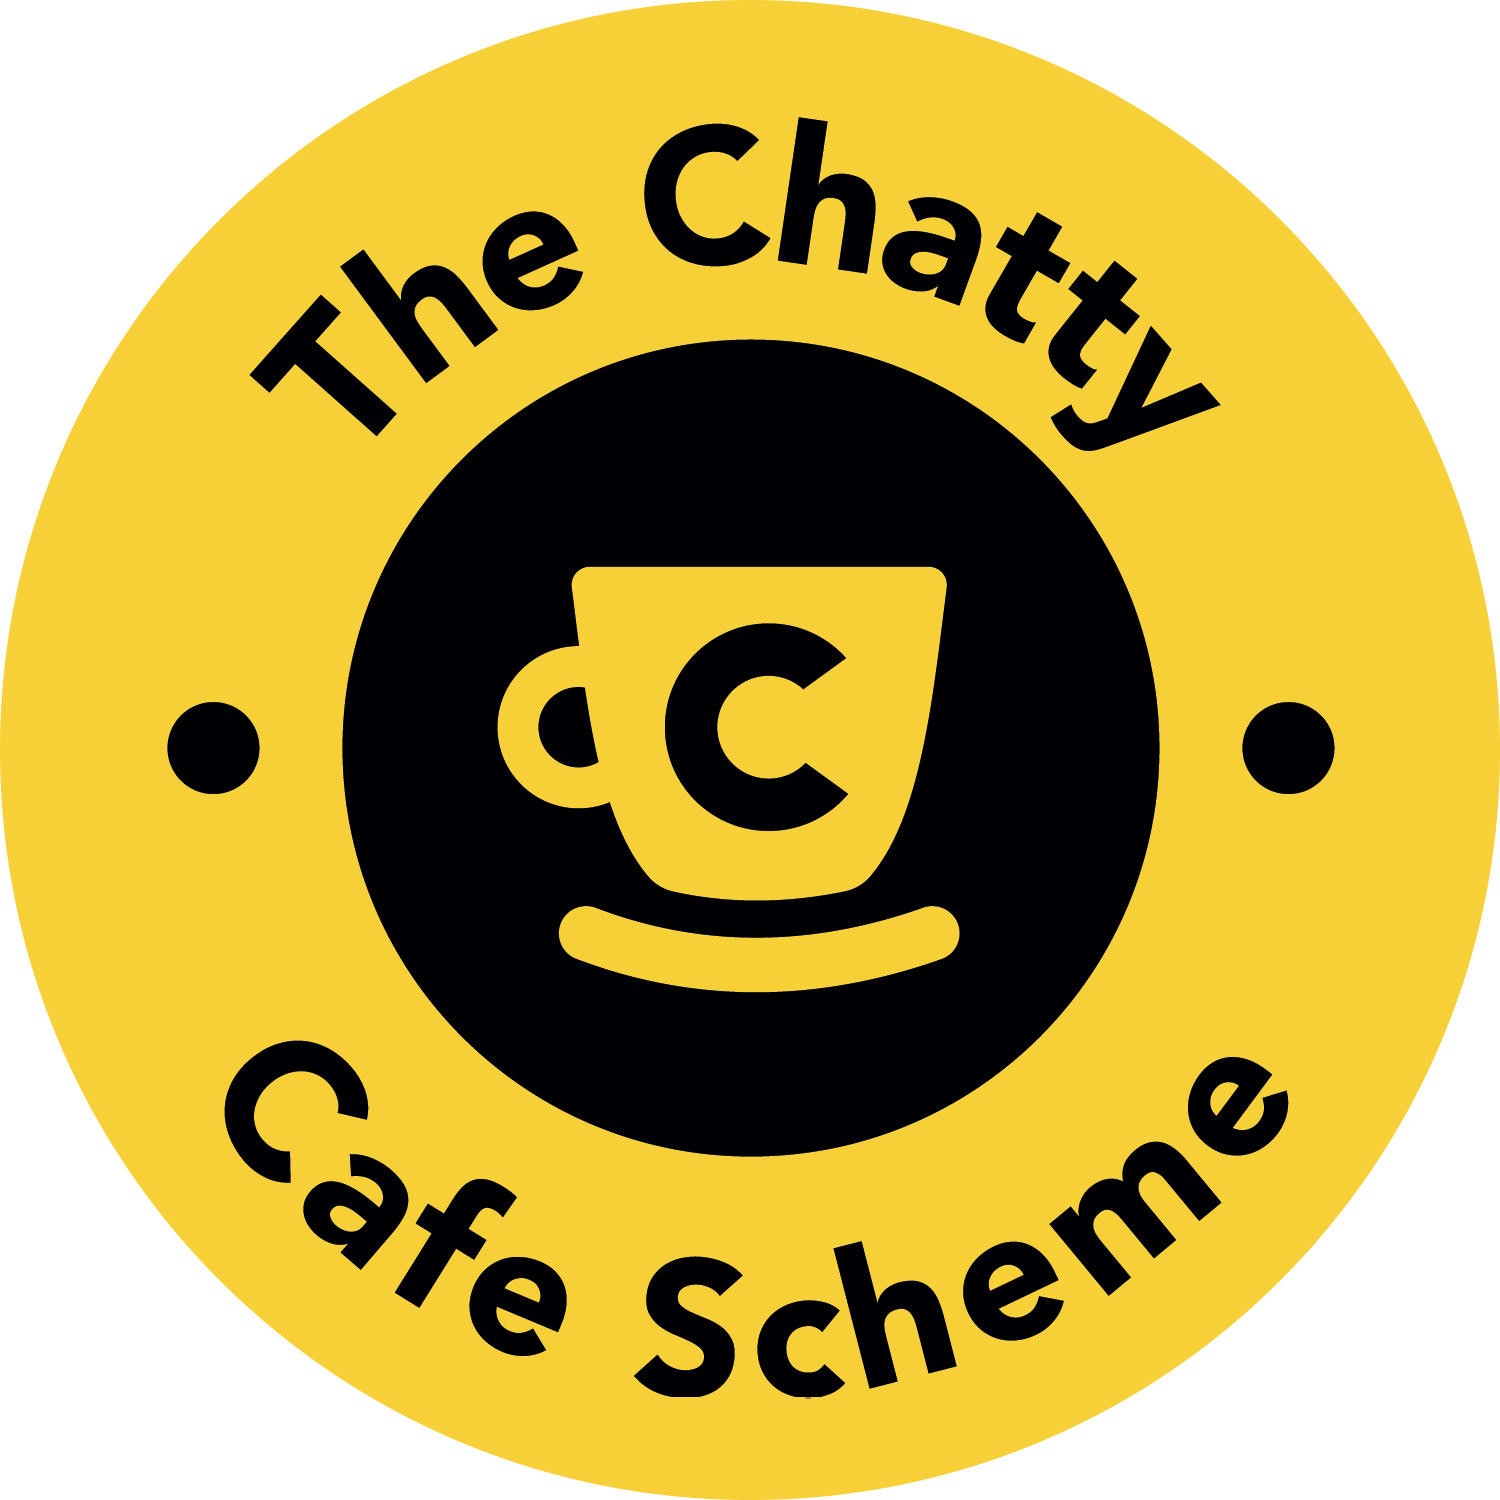 Chatty Cafe International logo round.jpg